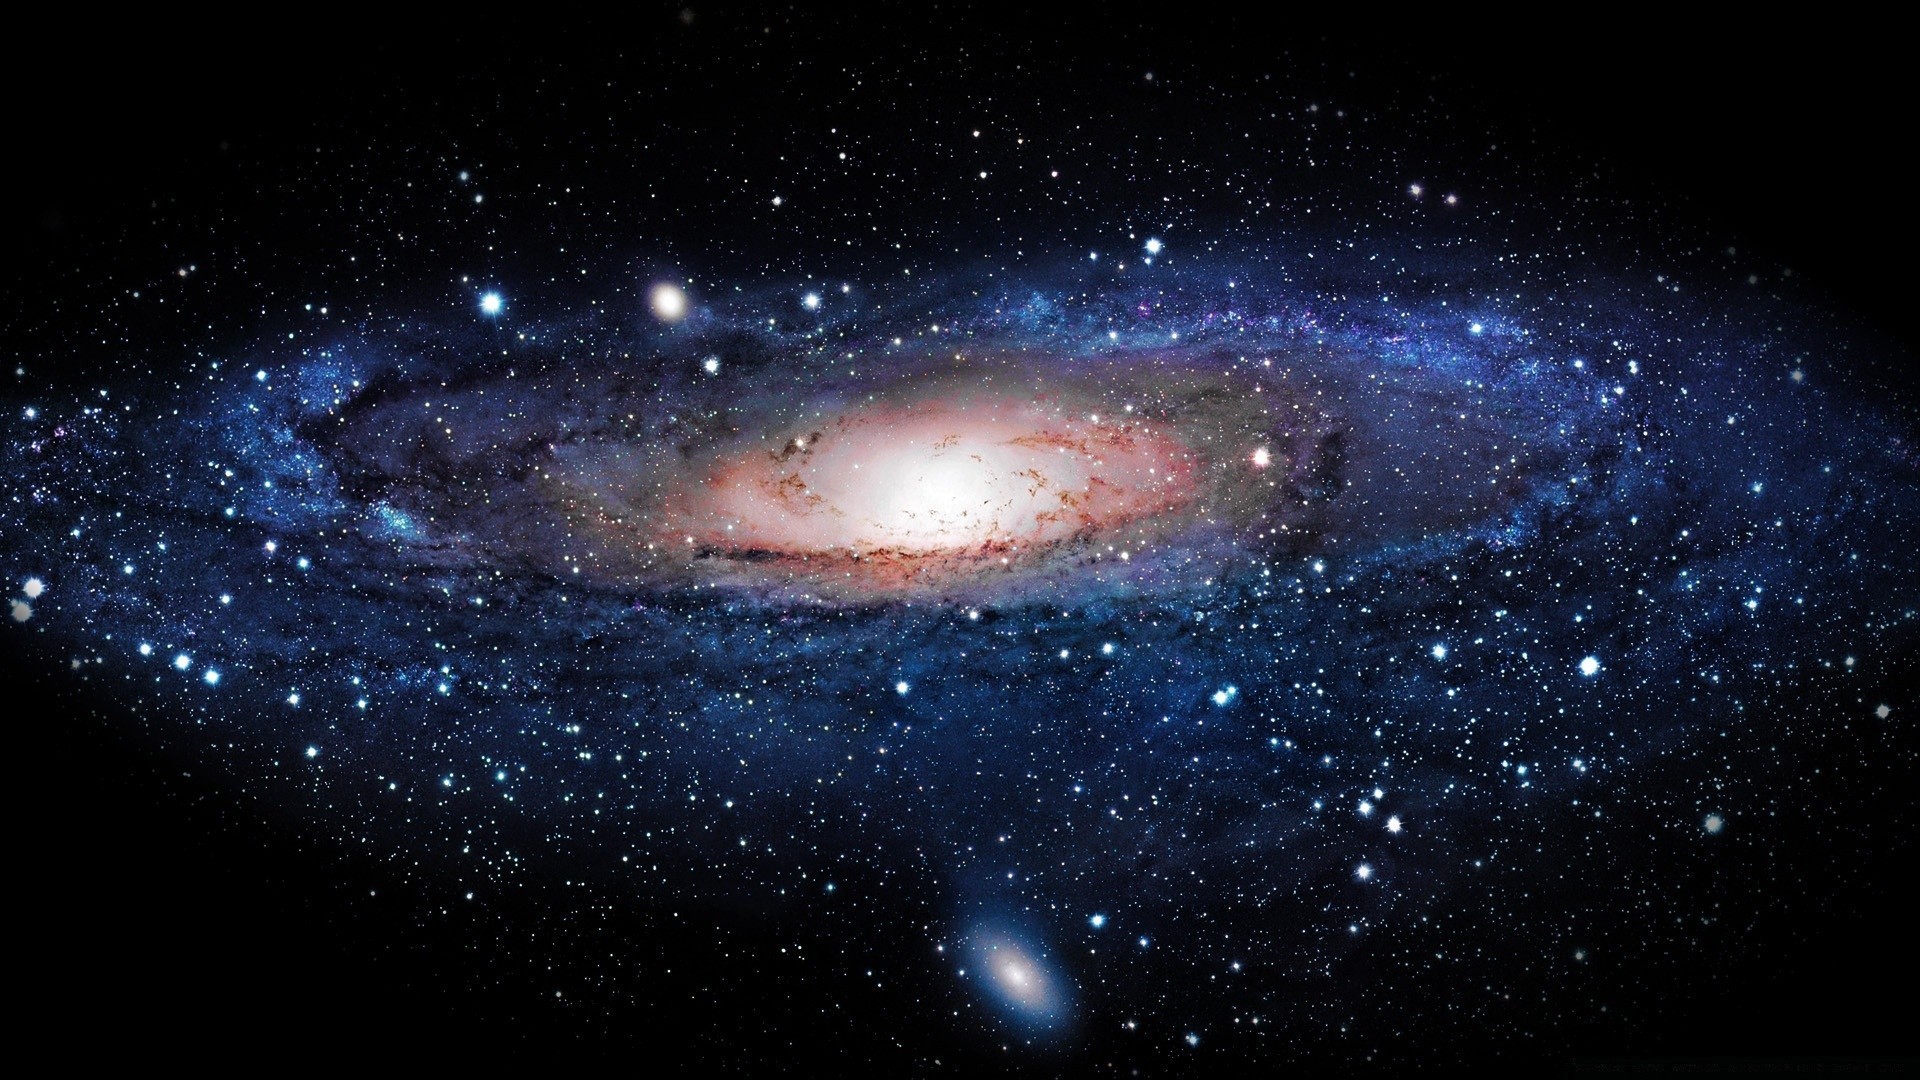 galaxy astronomy space nebula constellation exploration cosmos infinity dust planet moon science astrology solar system supernova telescope dark stellar huge orion